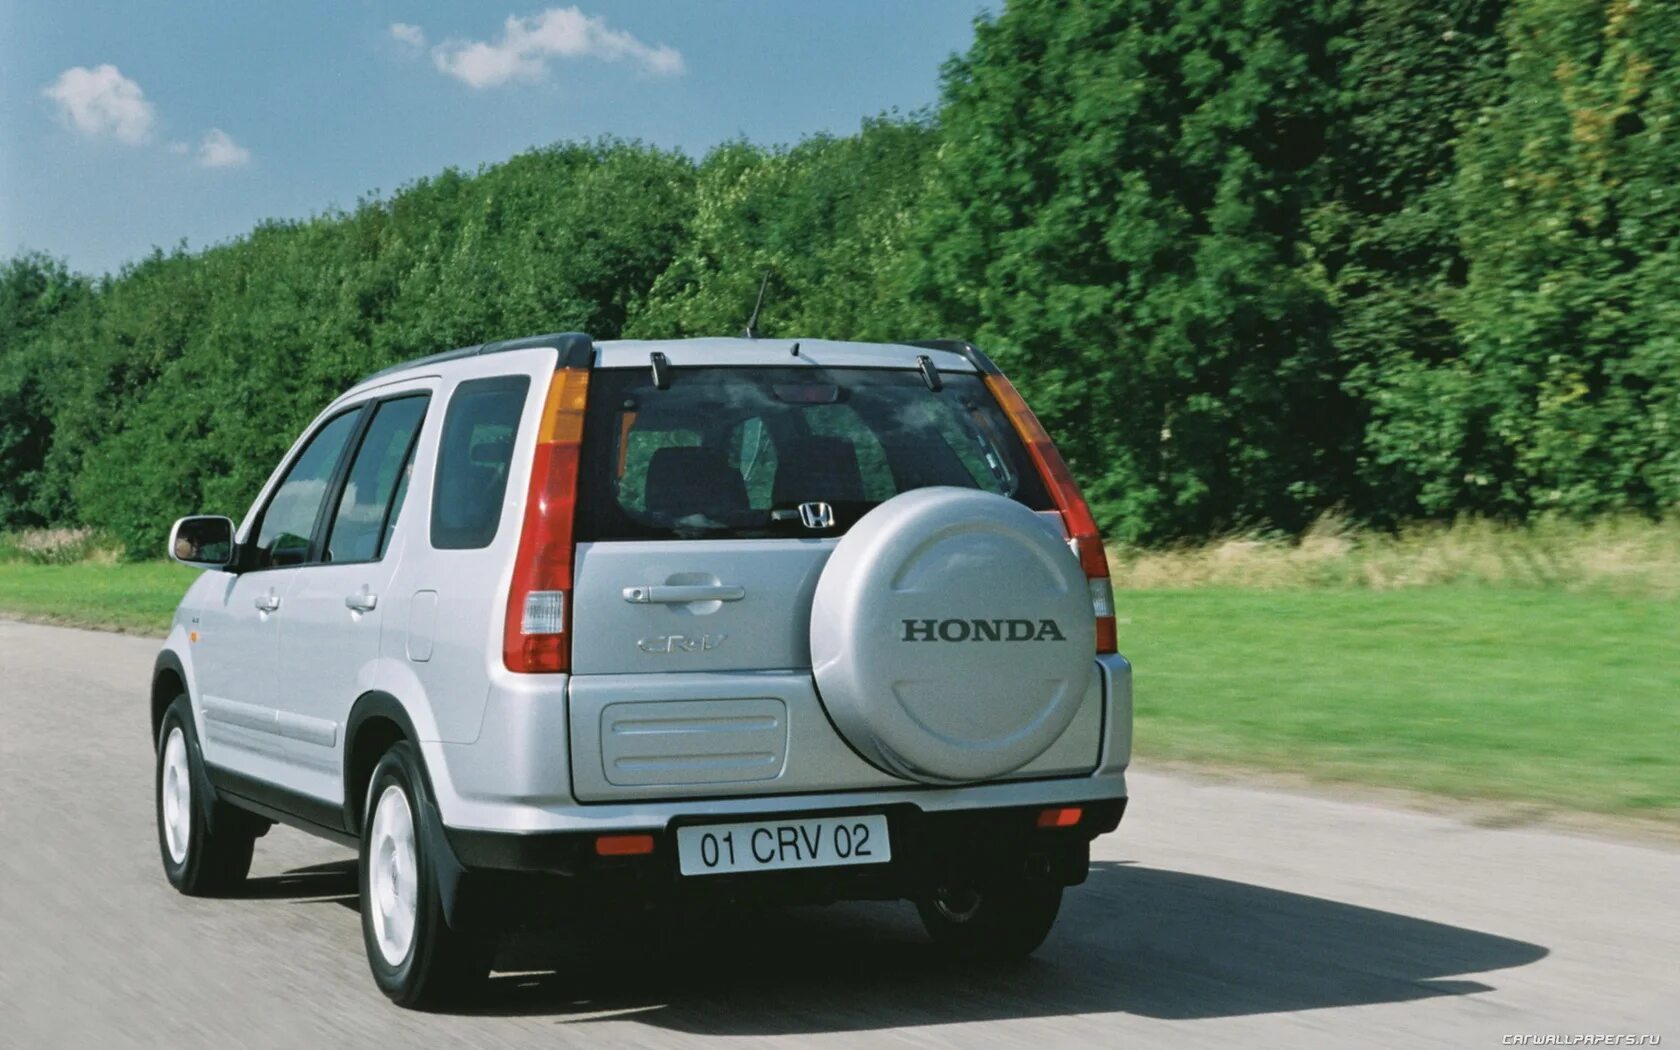 Хонда црв 2001 год. Honda CR-V 2002-2006. Honda CR-V 2 2002. Honda CR-V 2001. Honda CR-V 2 2006.